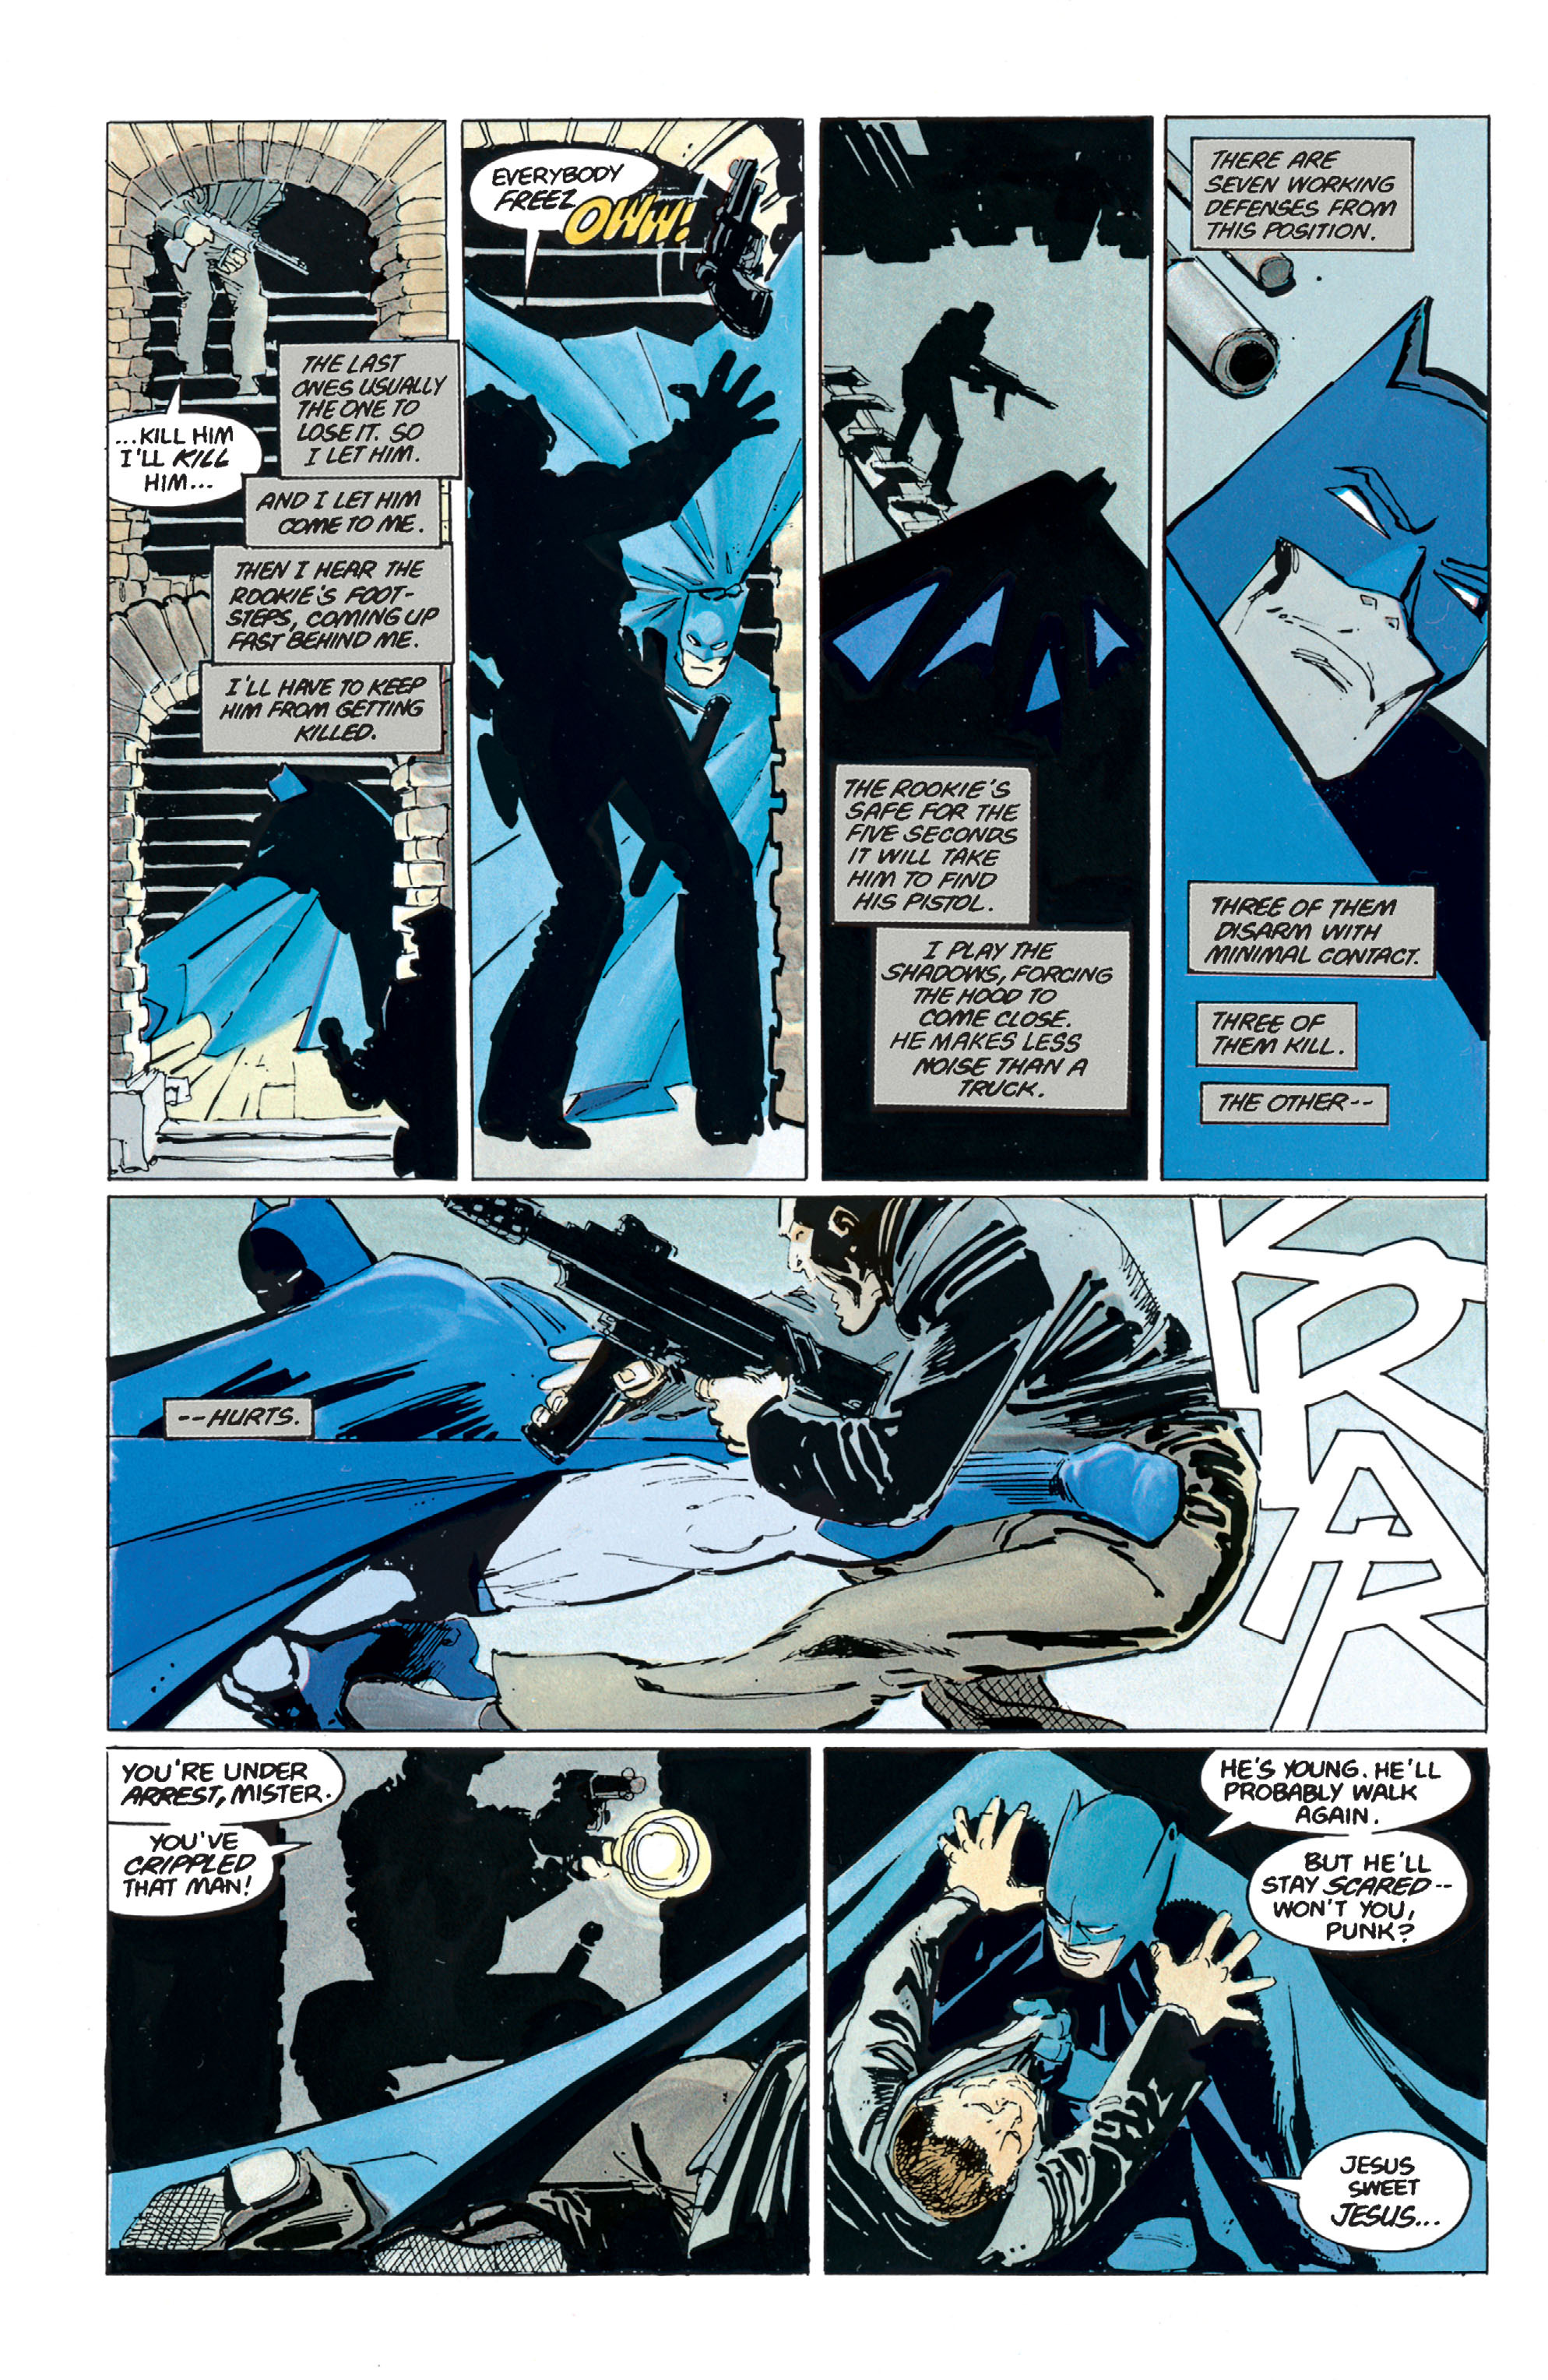 Arriba 93 Imagen Batman The Dark Knight Returns Comic Online Abzlocalmx